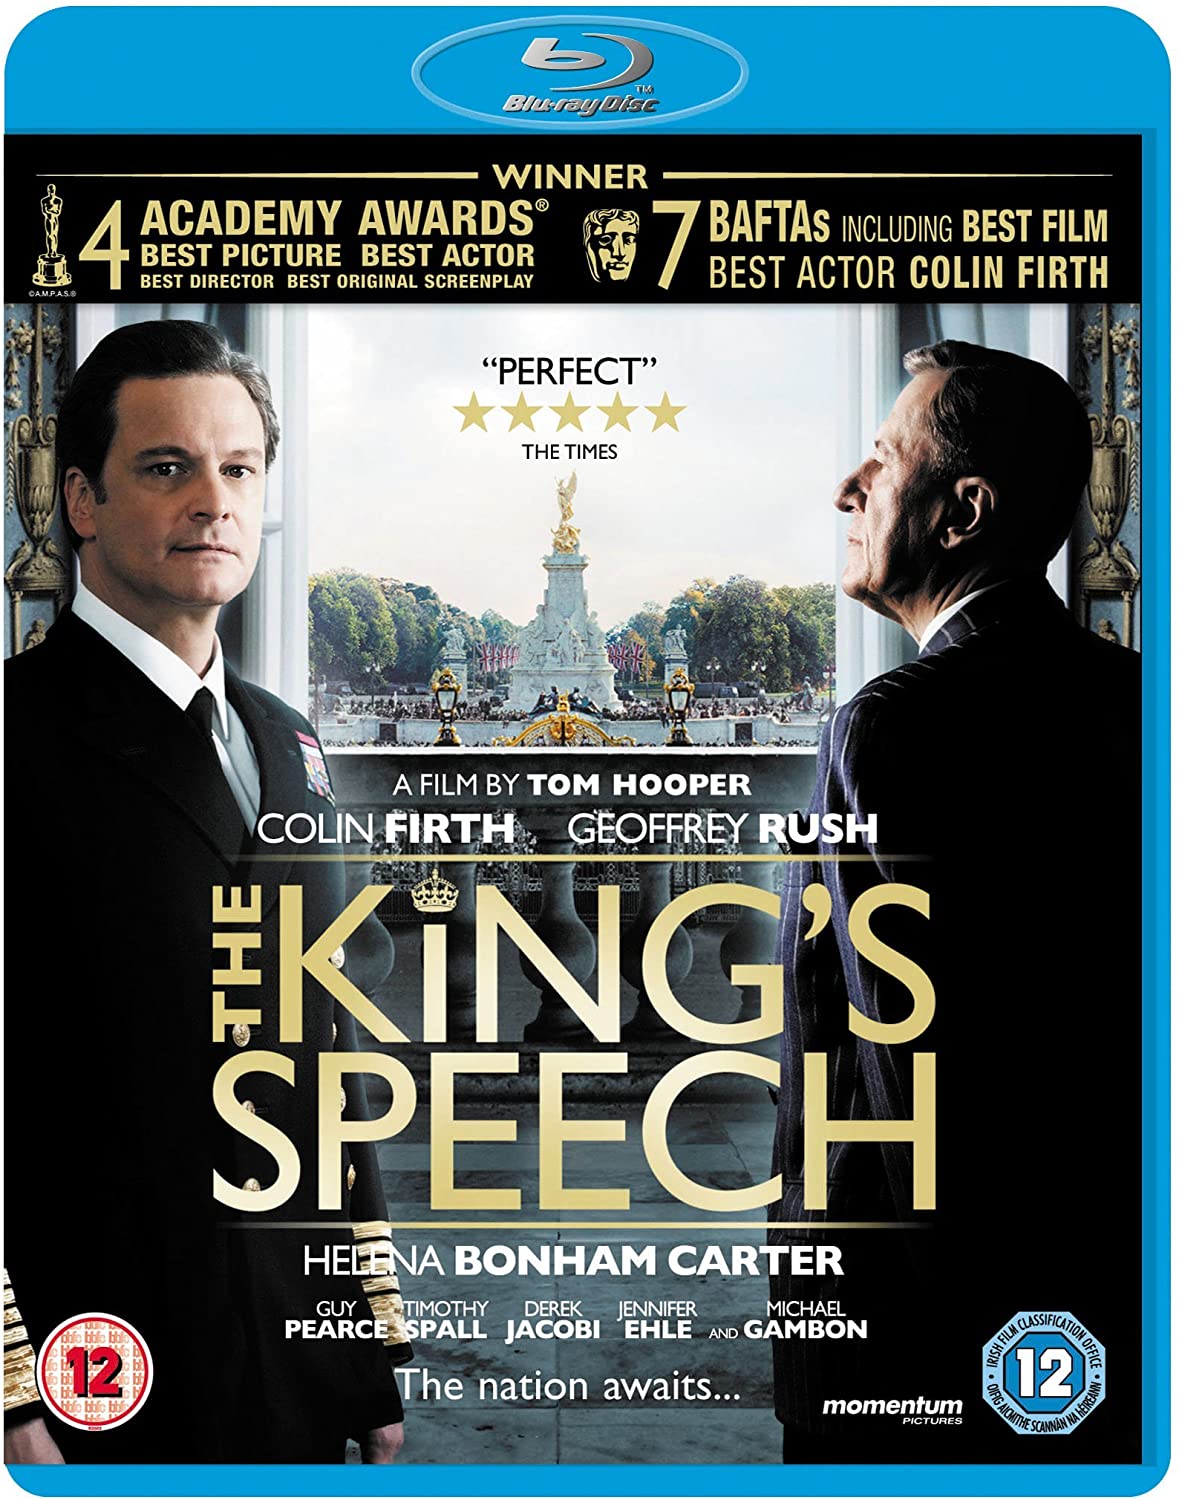 The King's Speech [2011] (Blu-ray)